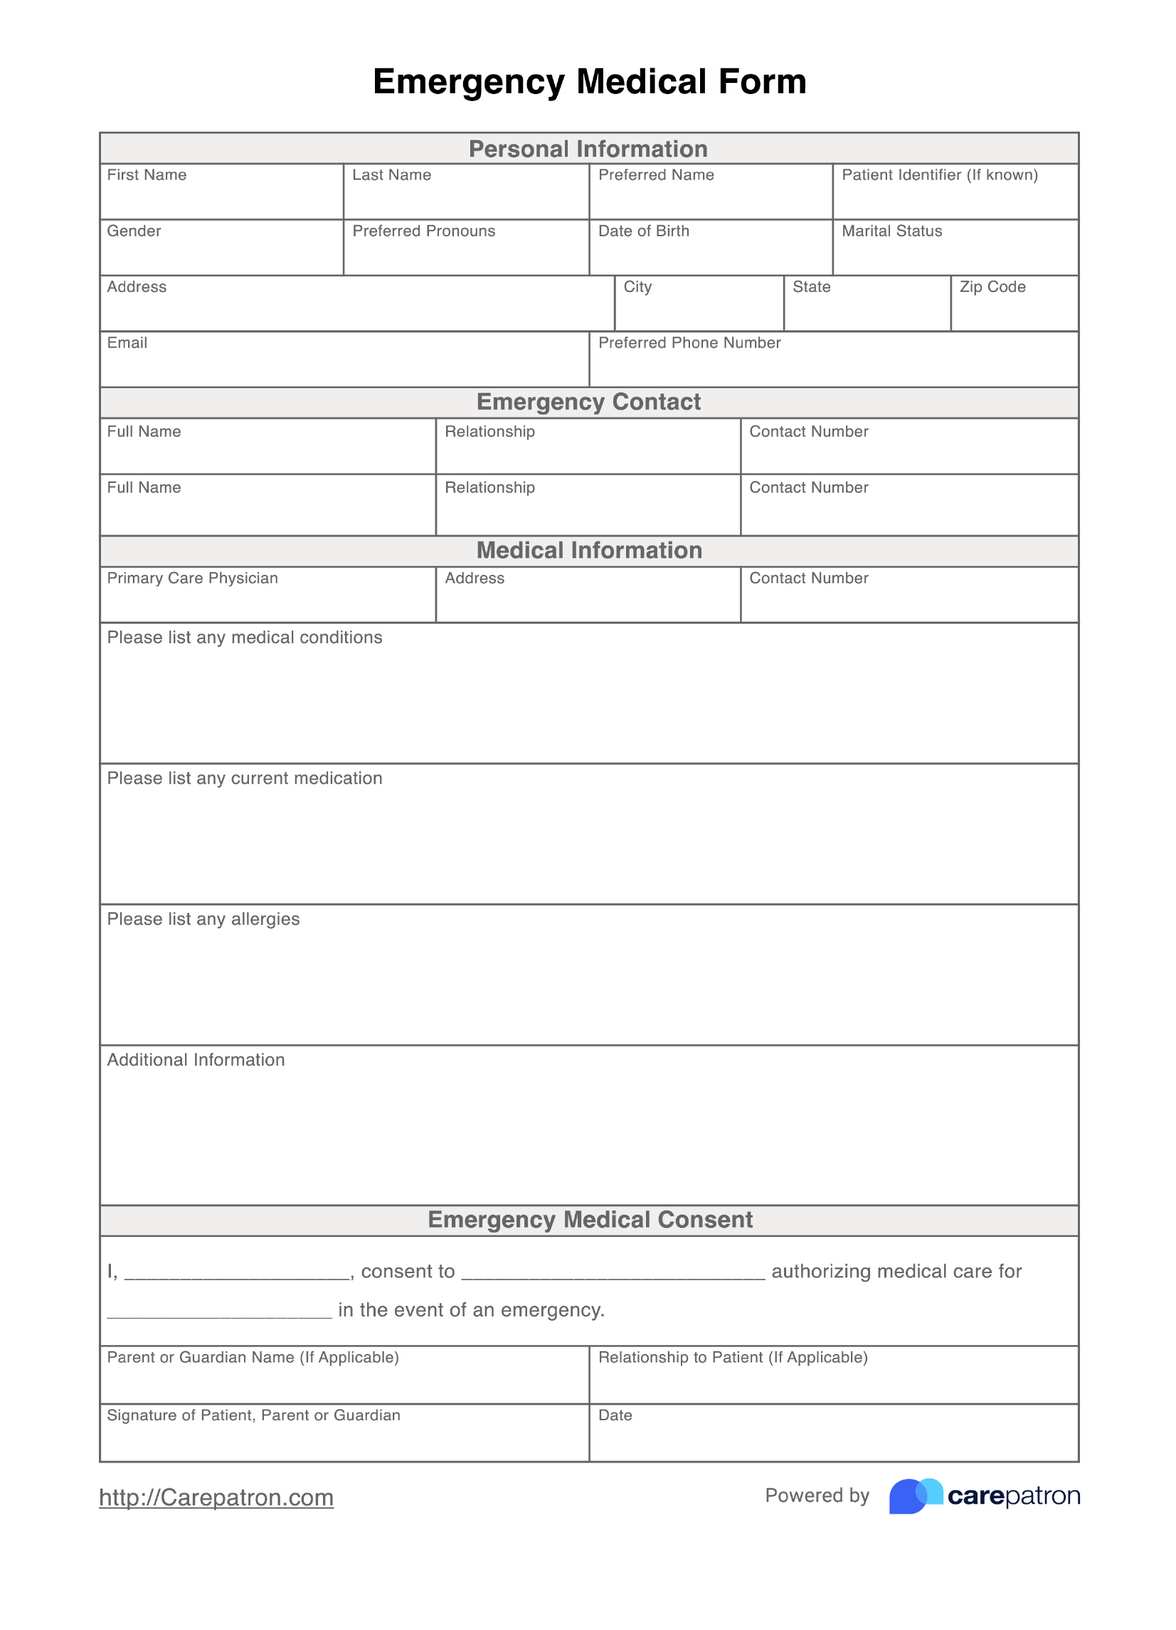 Emergency Medical Form PDF Example